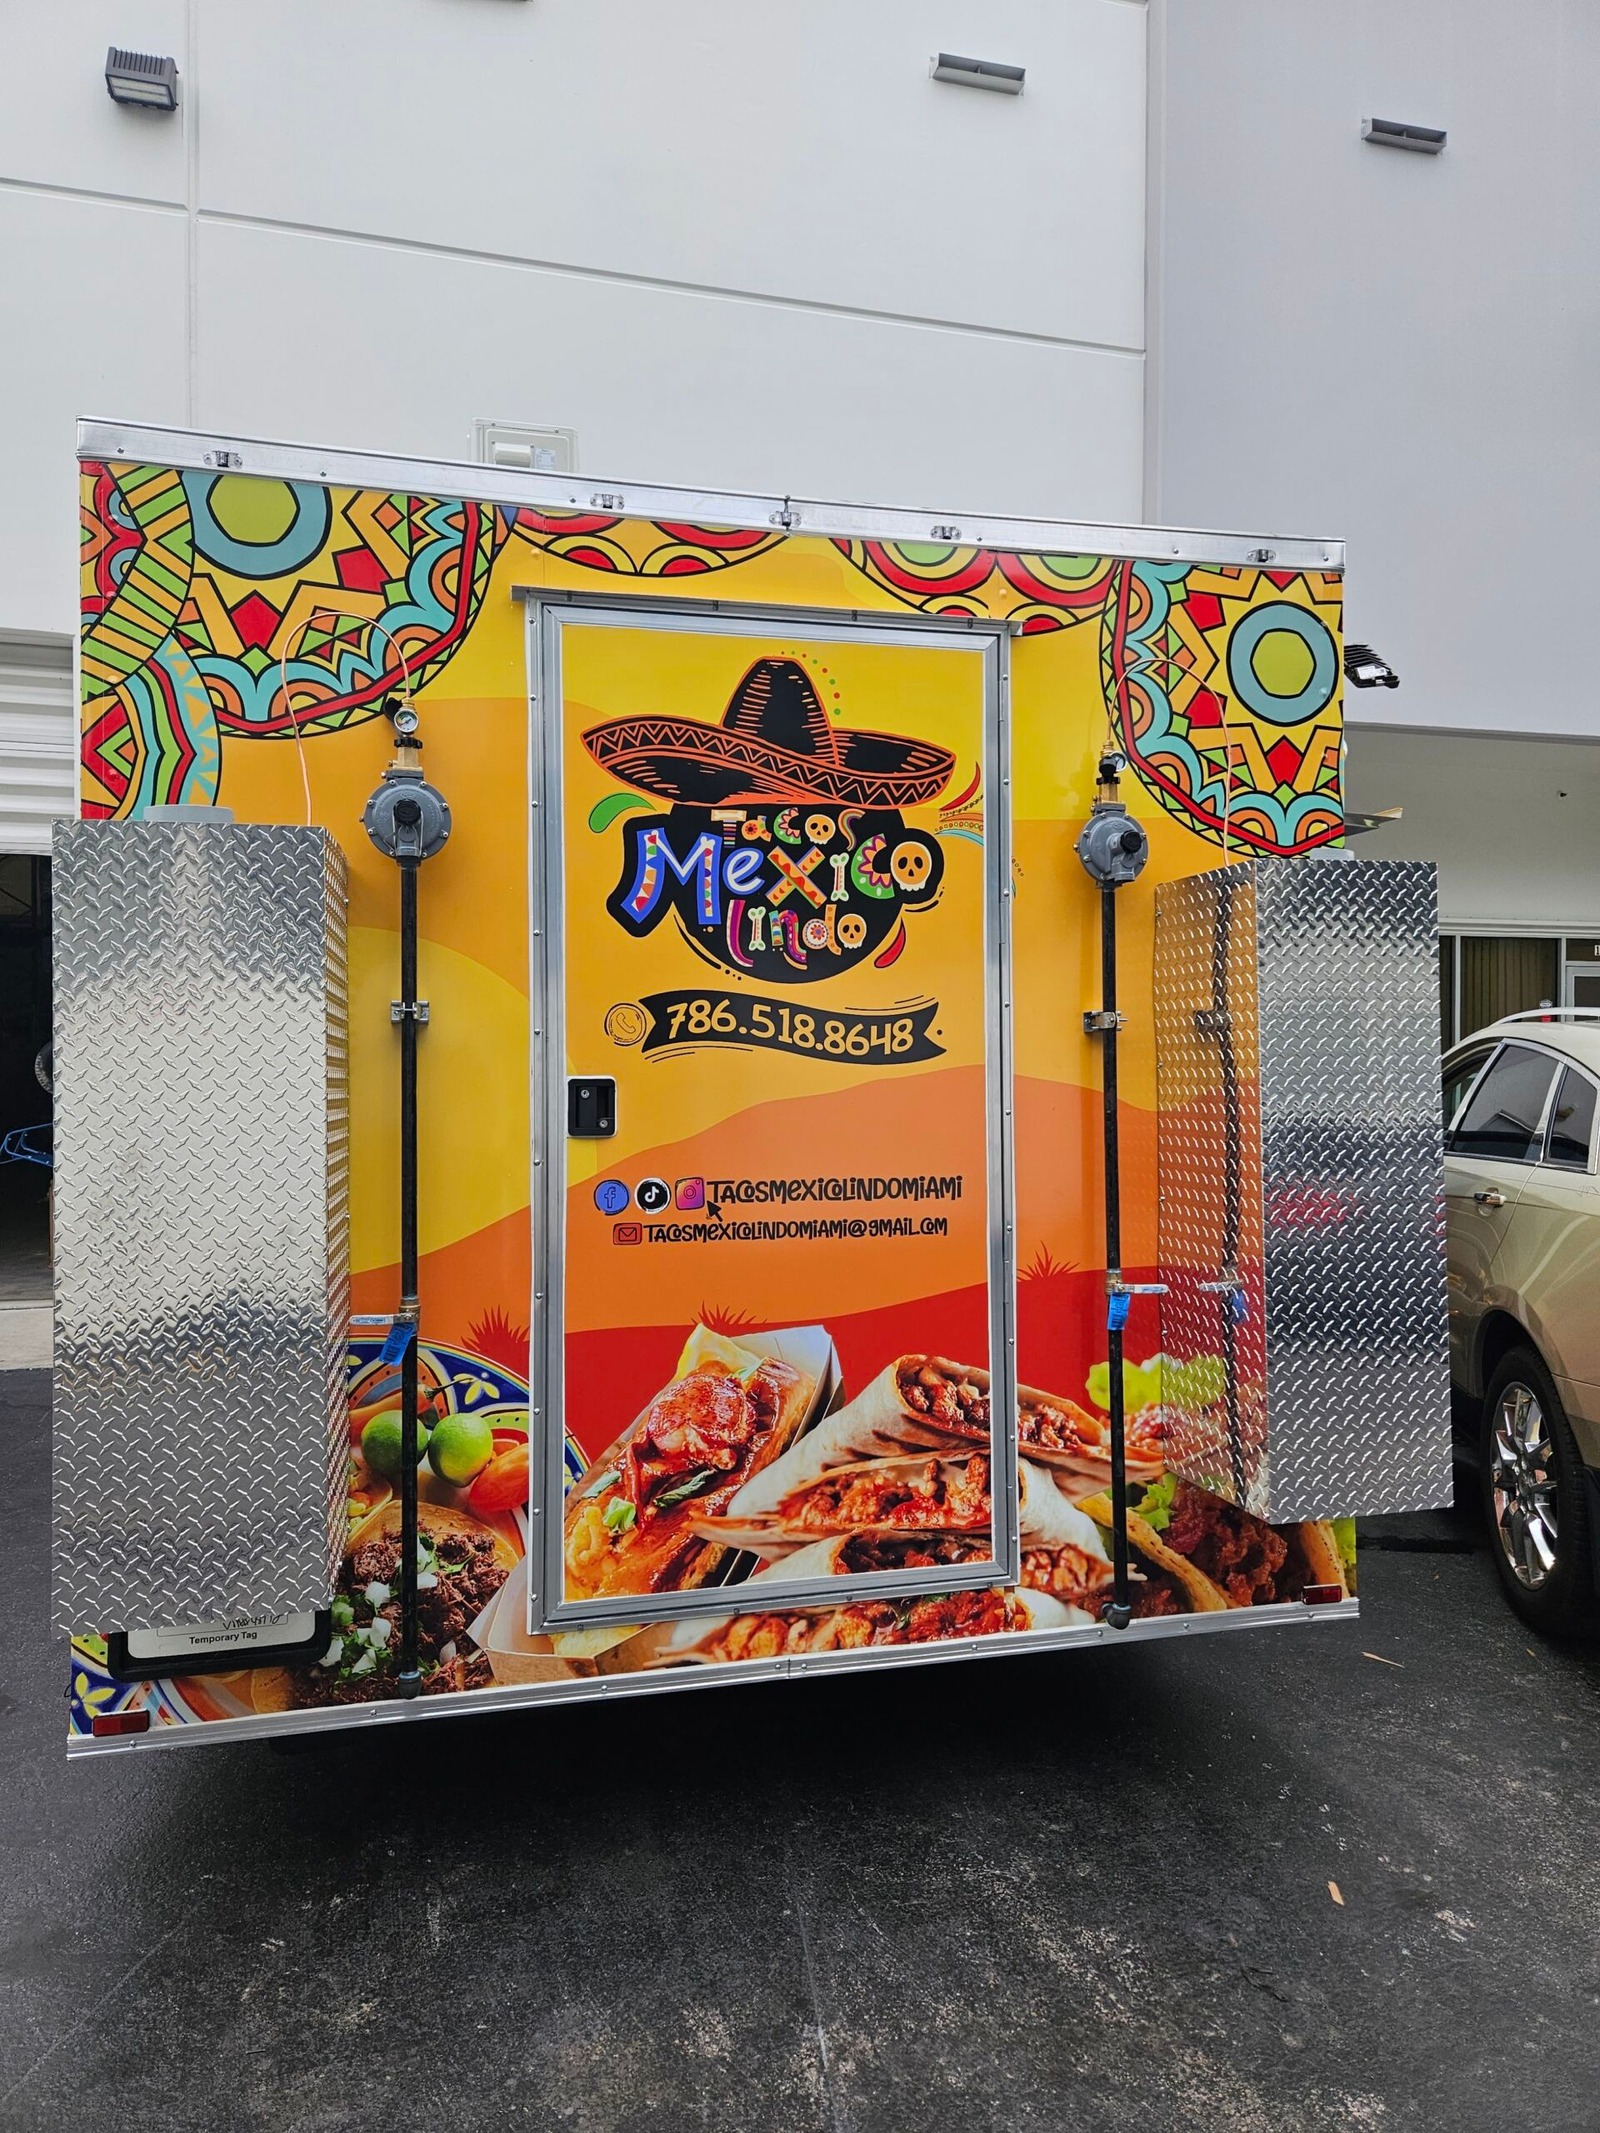 20231025 171900 scaled - Tacos Mexico Lindo Food Trailer